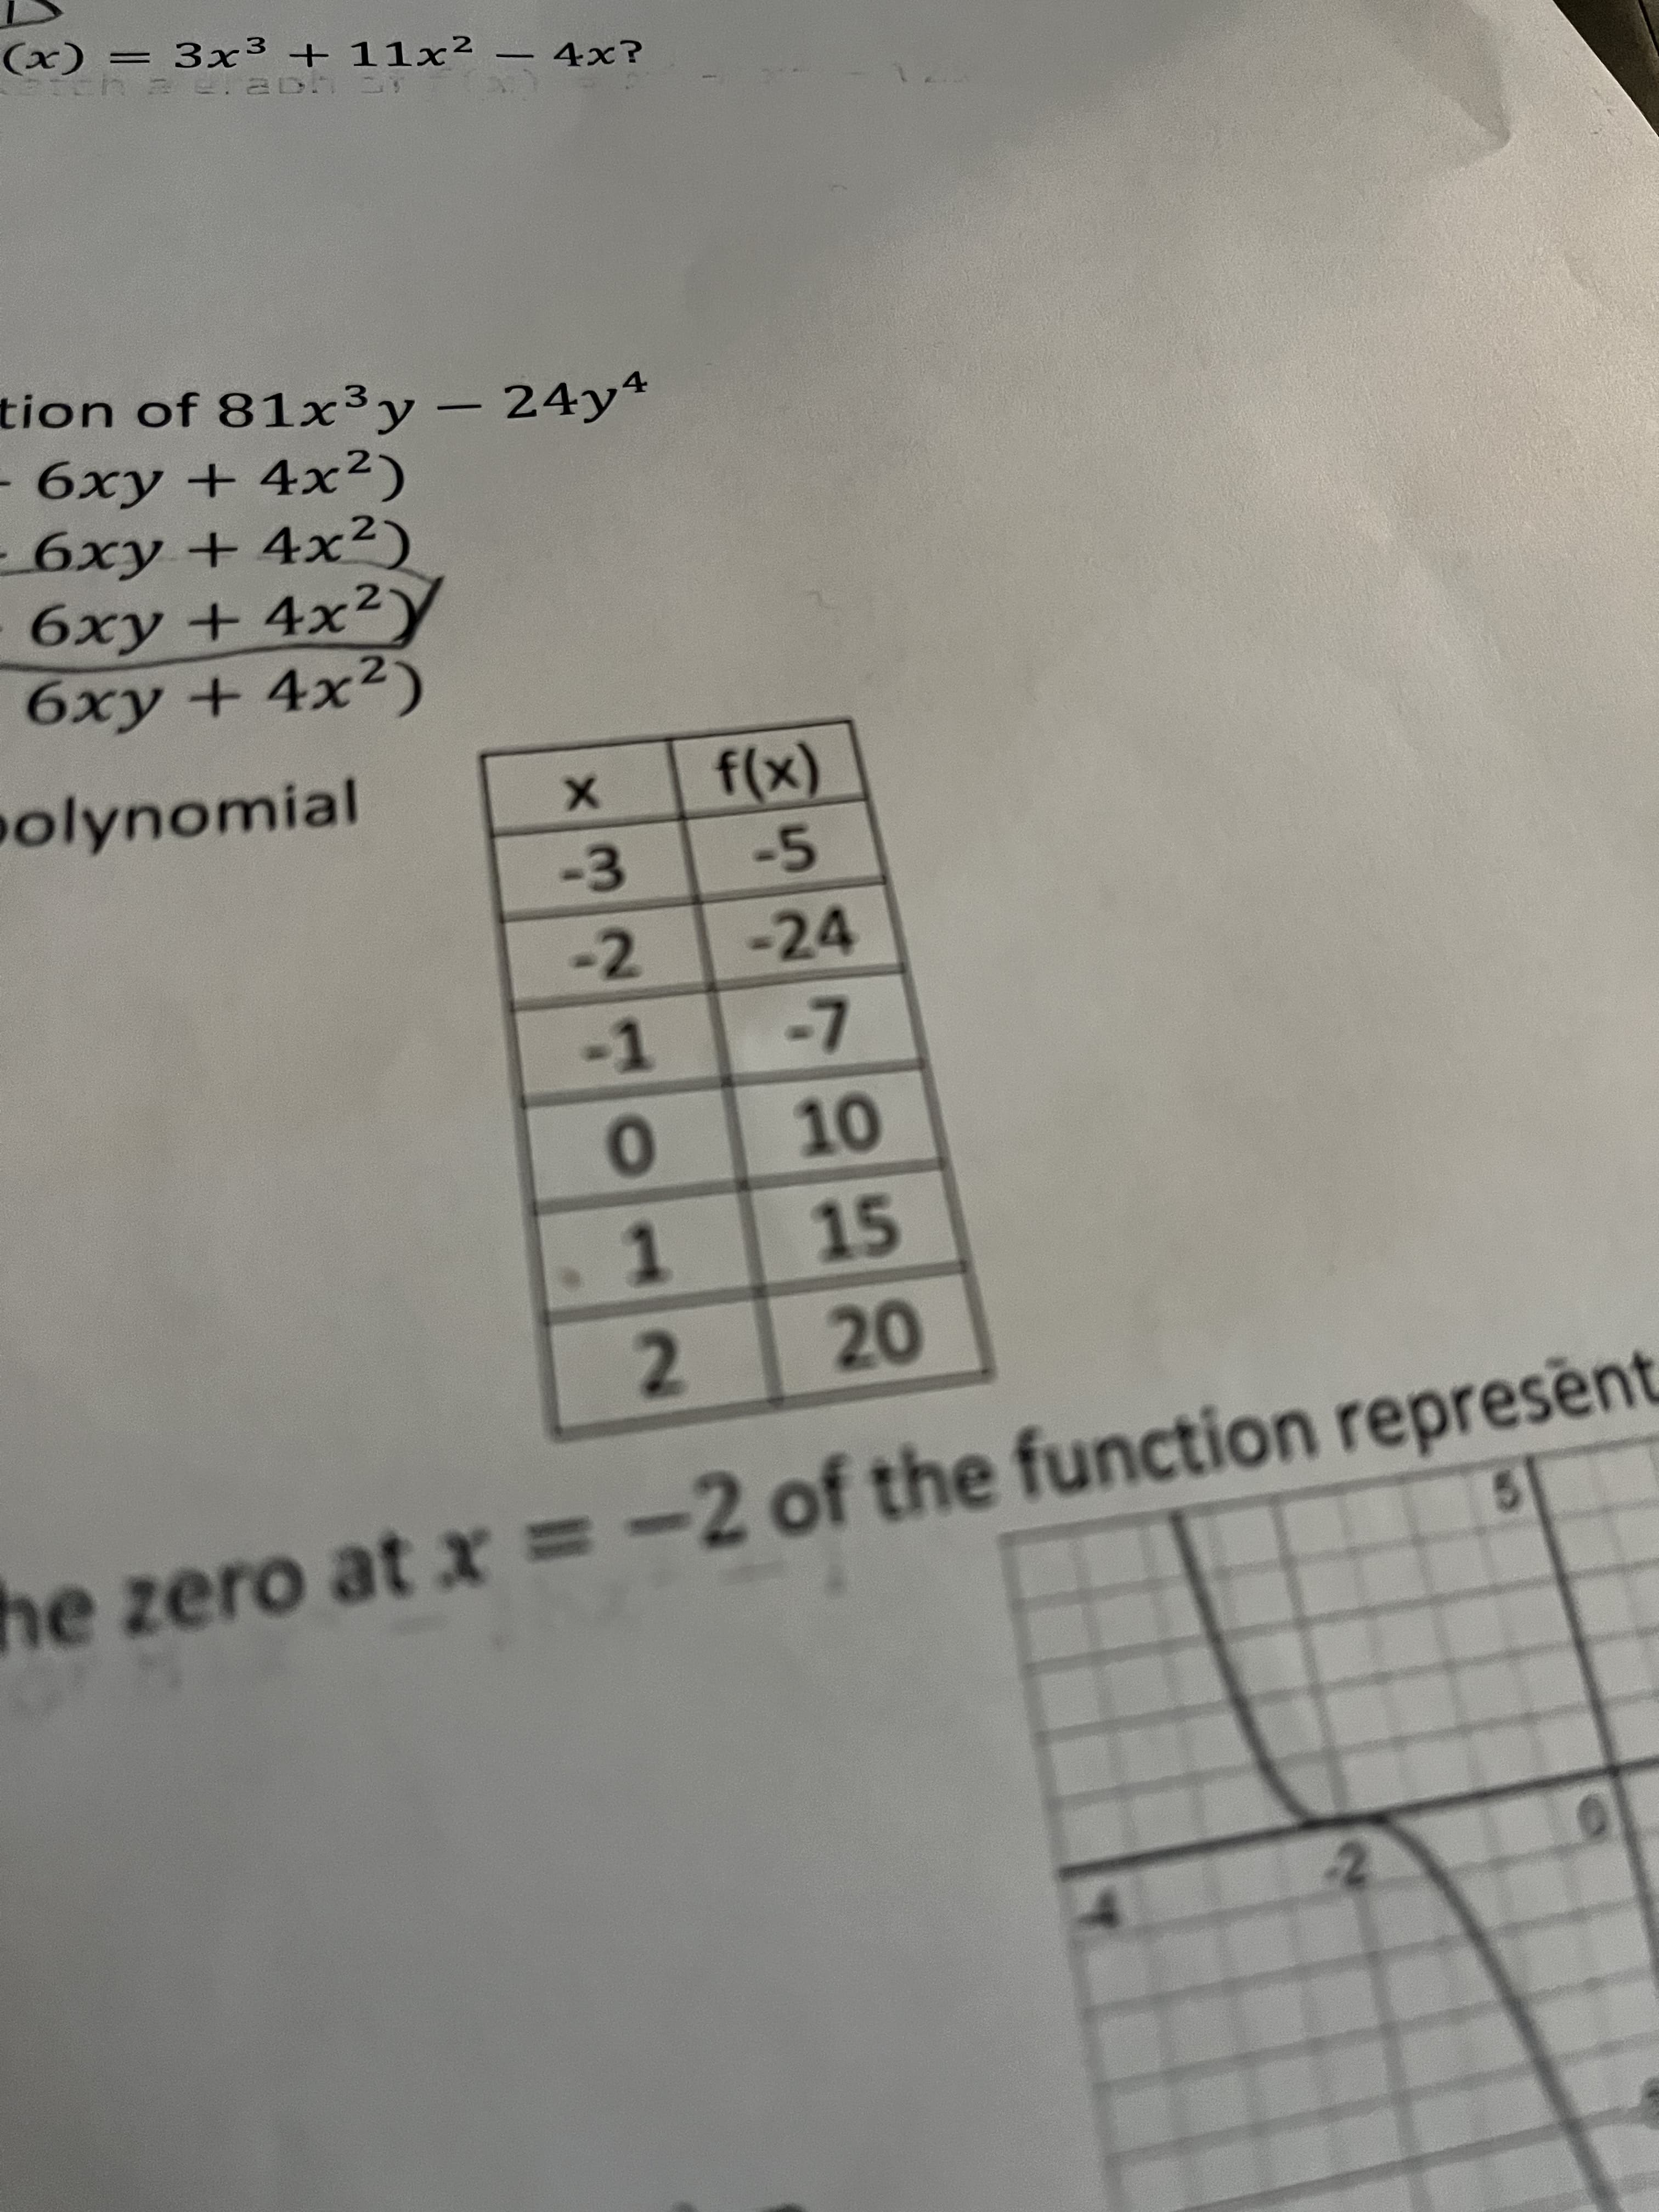 2.
(x) = 3x3 + 11x²
%3D
- 4x?
-
tion of 81x3y – 24yª
6xy + 4x²)
- 6xy + 4x²)
6xy+ 4x2
oolynomial
(x))
-5
-3
-2
-24
-1
1
15
of the function represen
he zero at x =-2 nt
2.
